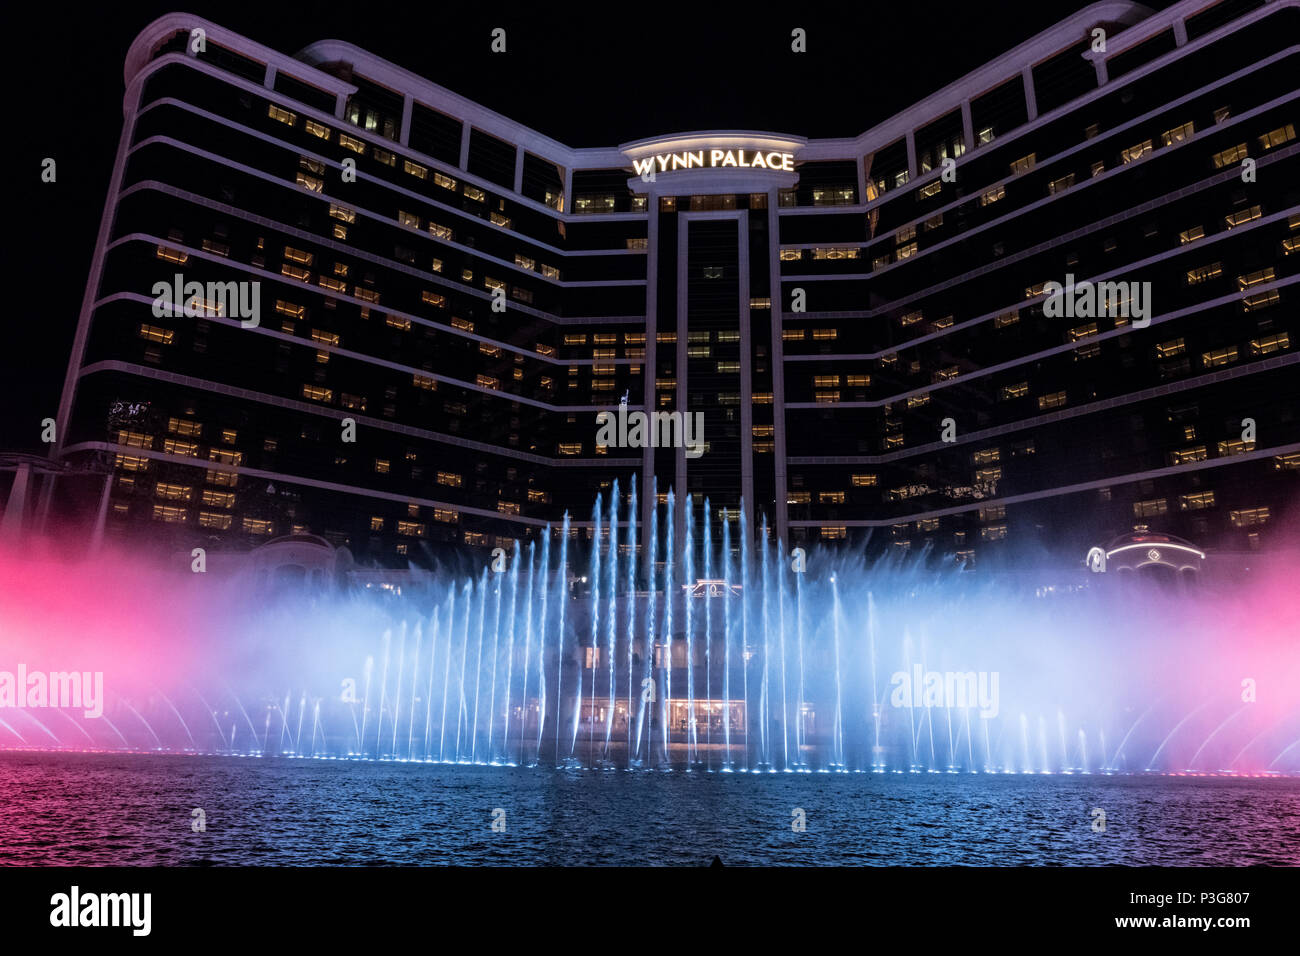 wynn resort macau Cotai strip casino hotel architecture fountain destination Stock Photo